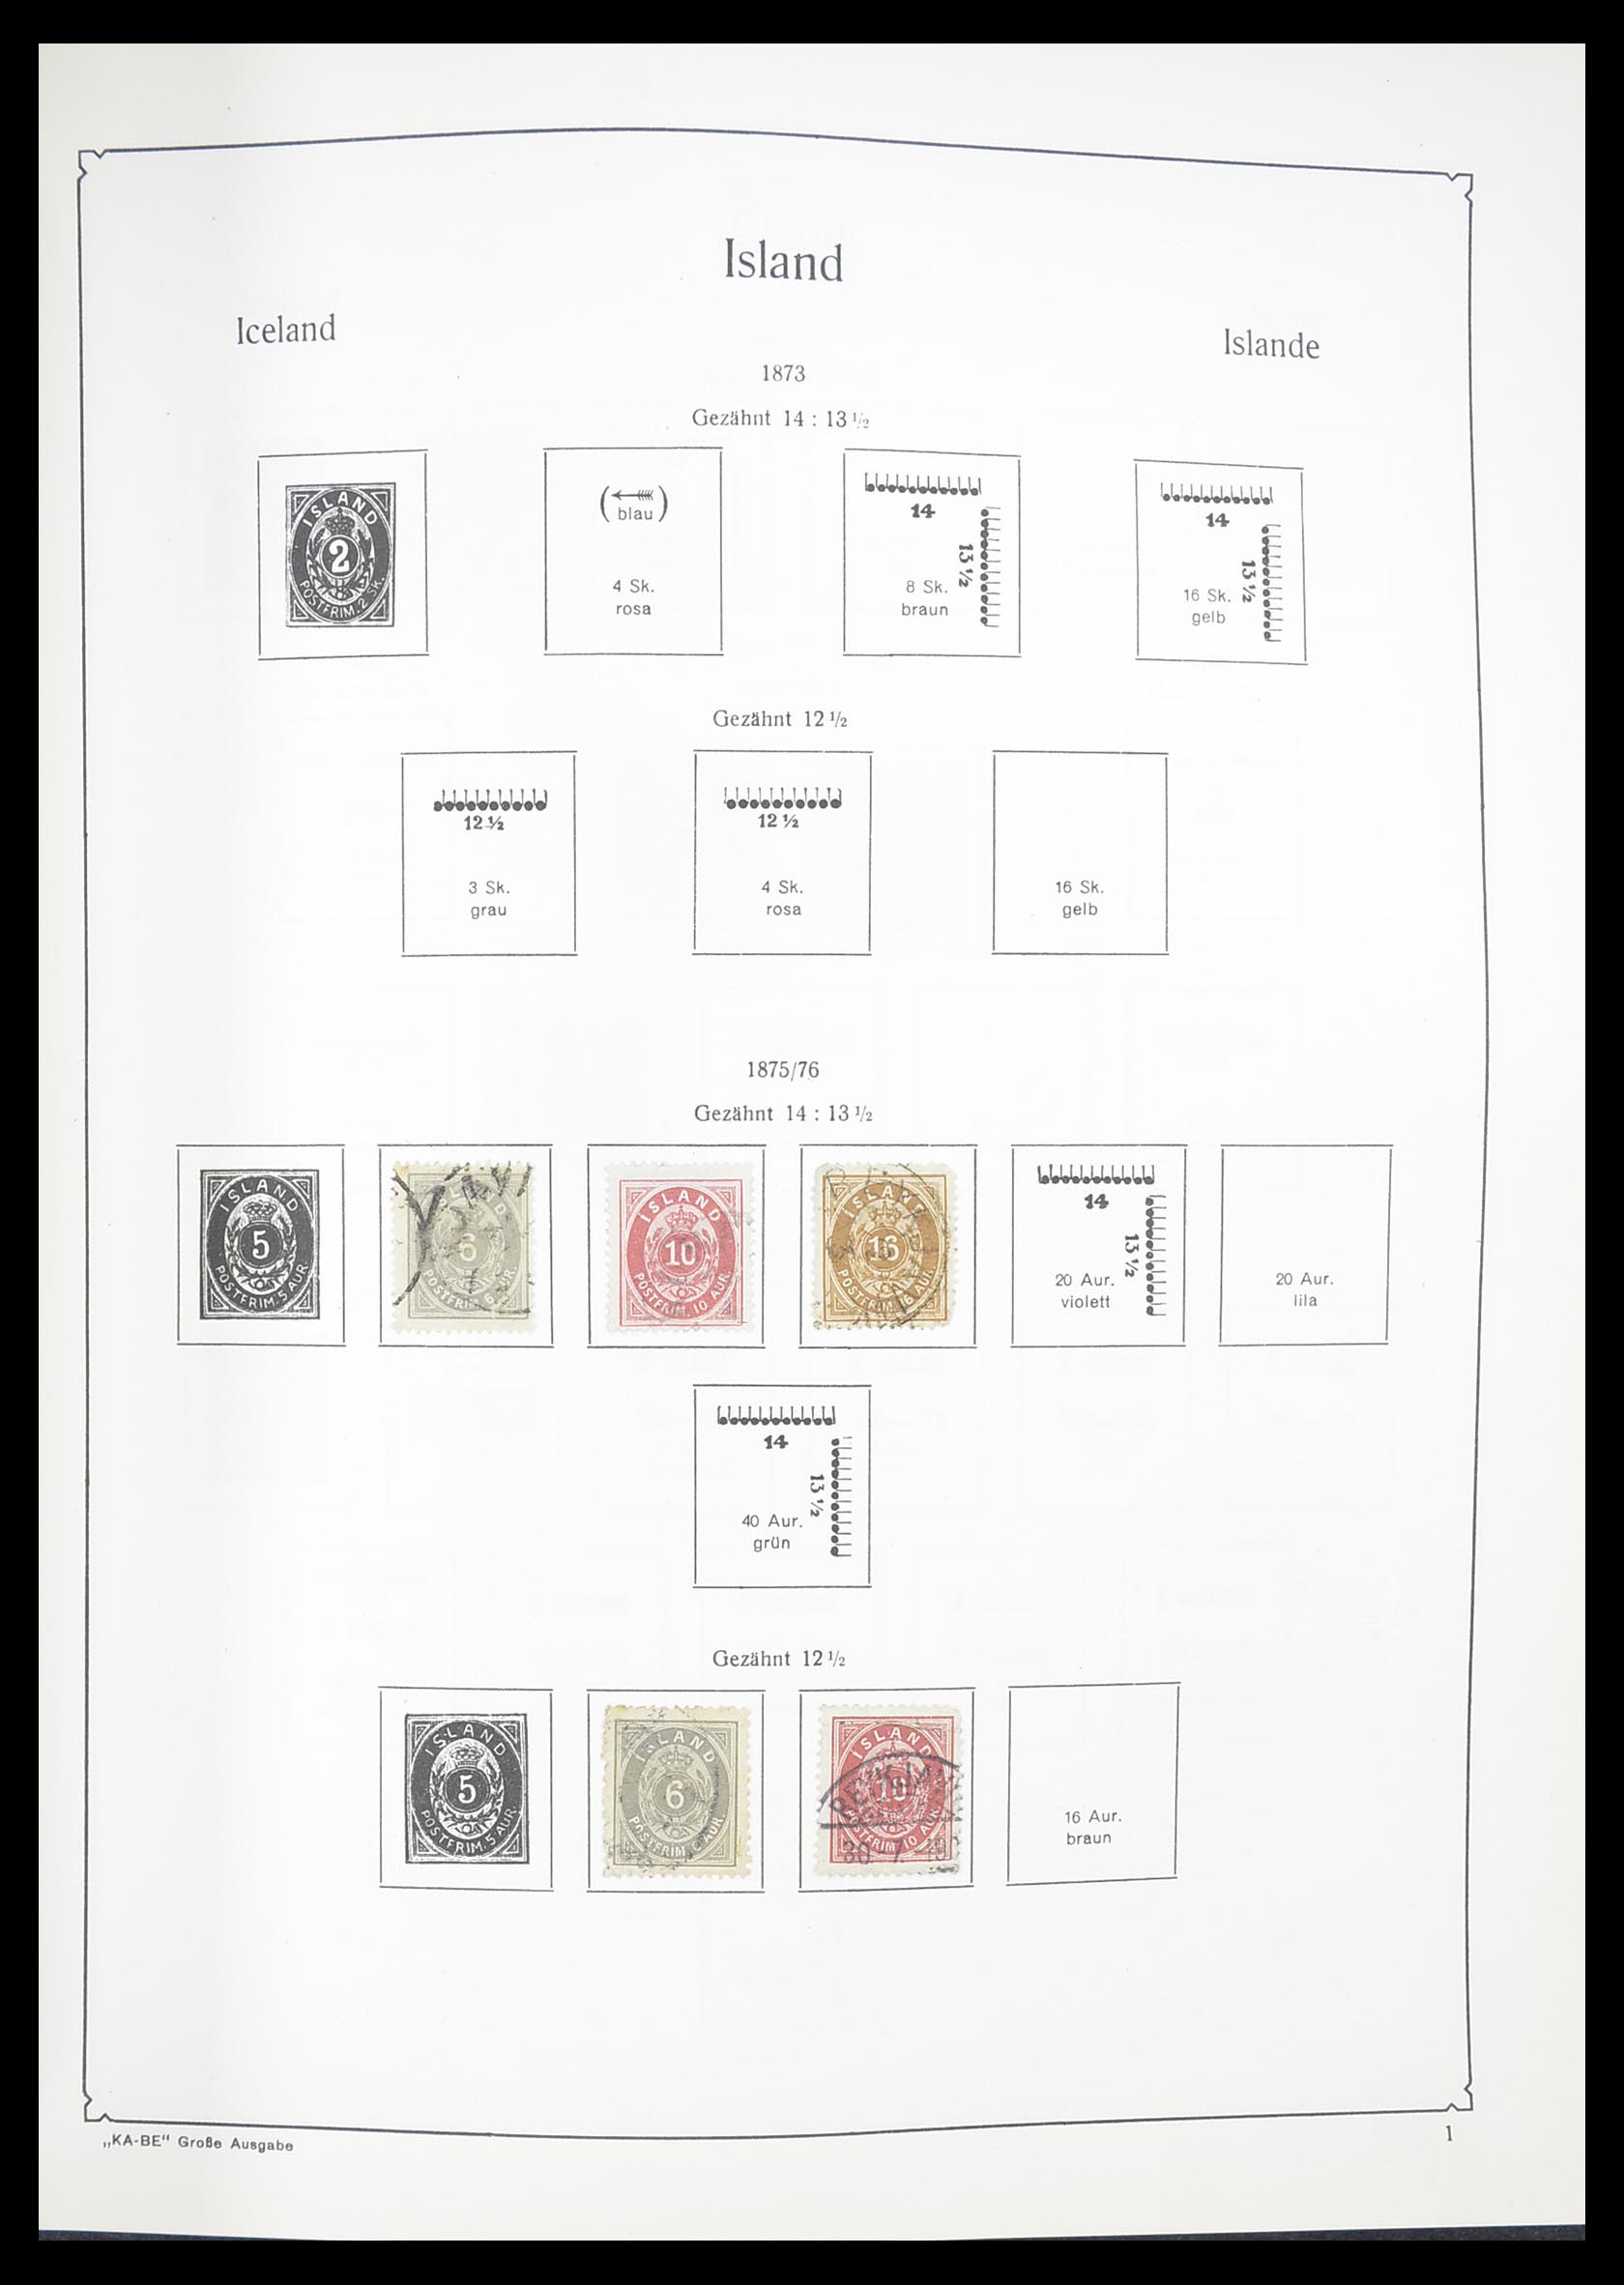 33379 061 - Stamp collection 33379 Scandinavia 1856-1972.